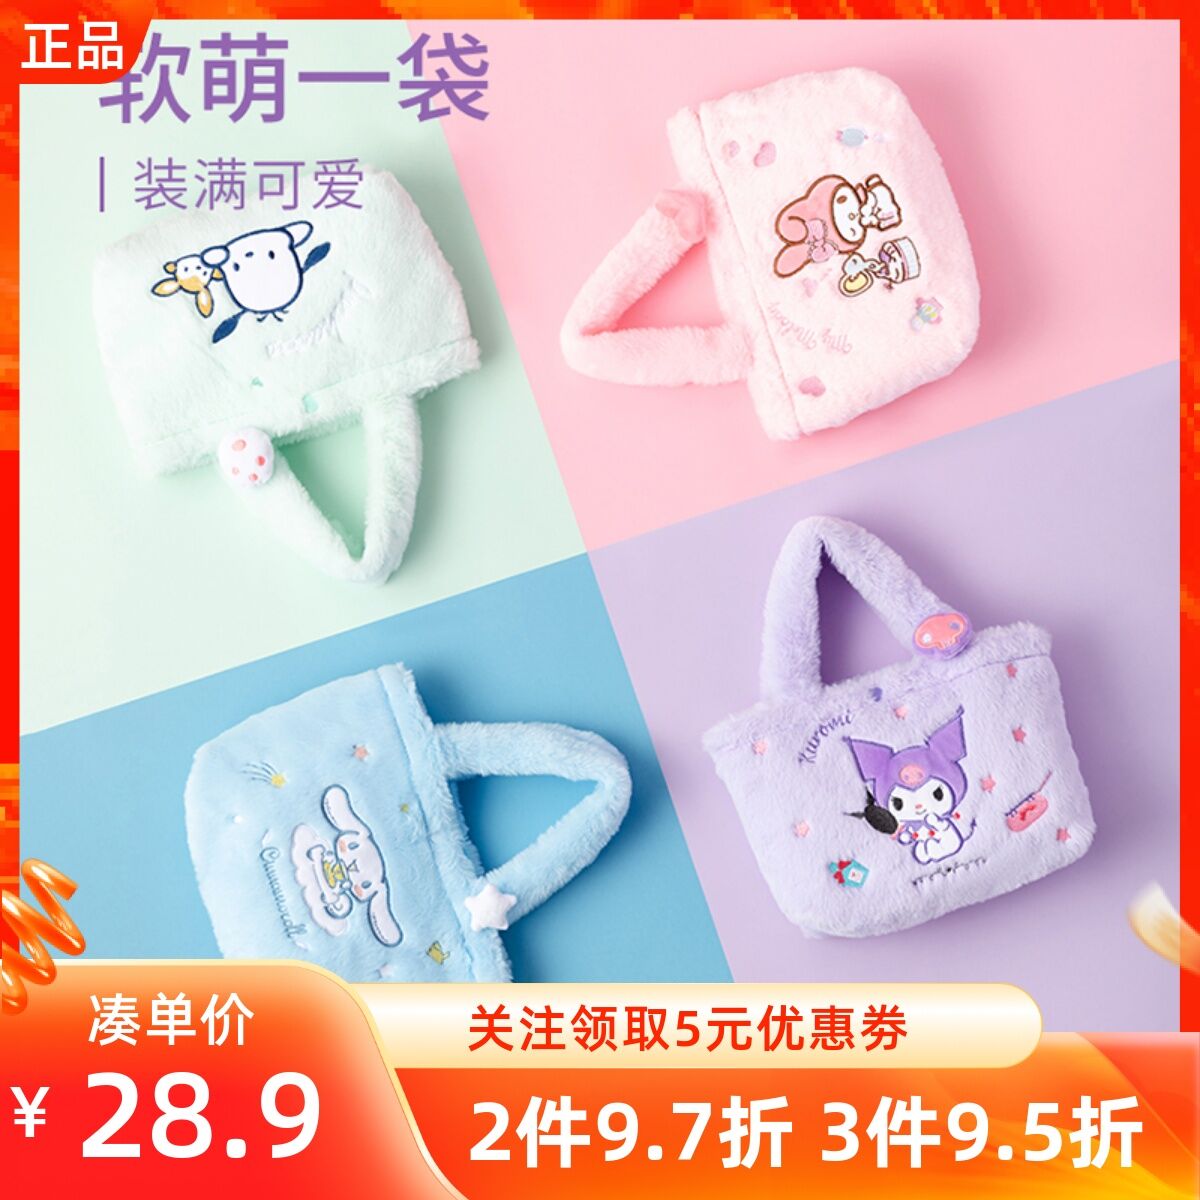 Sanrio, Bags, Miniso Sanrio Hello Kitty Trapezoid Lunch Bag